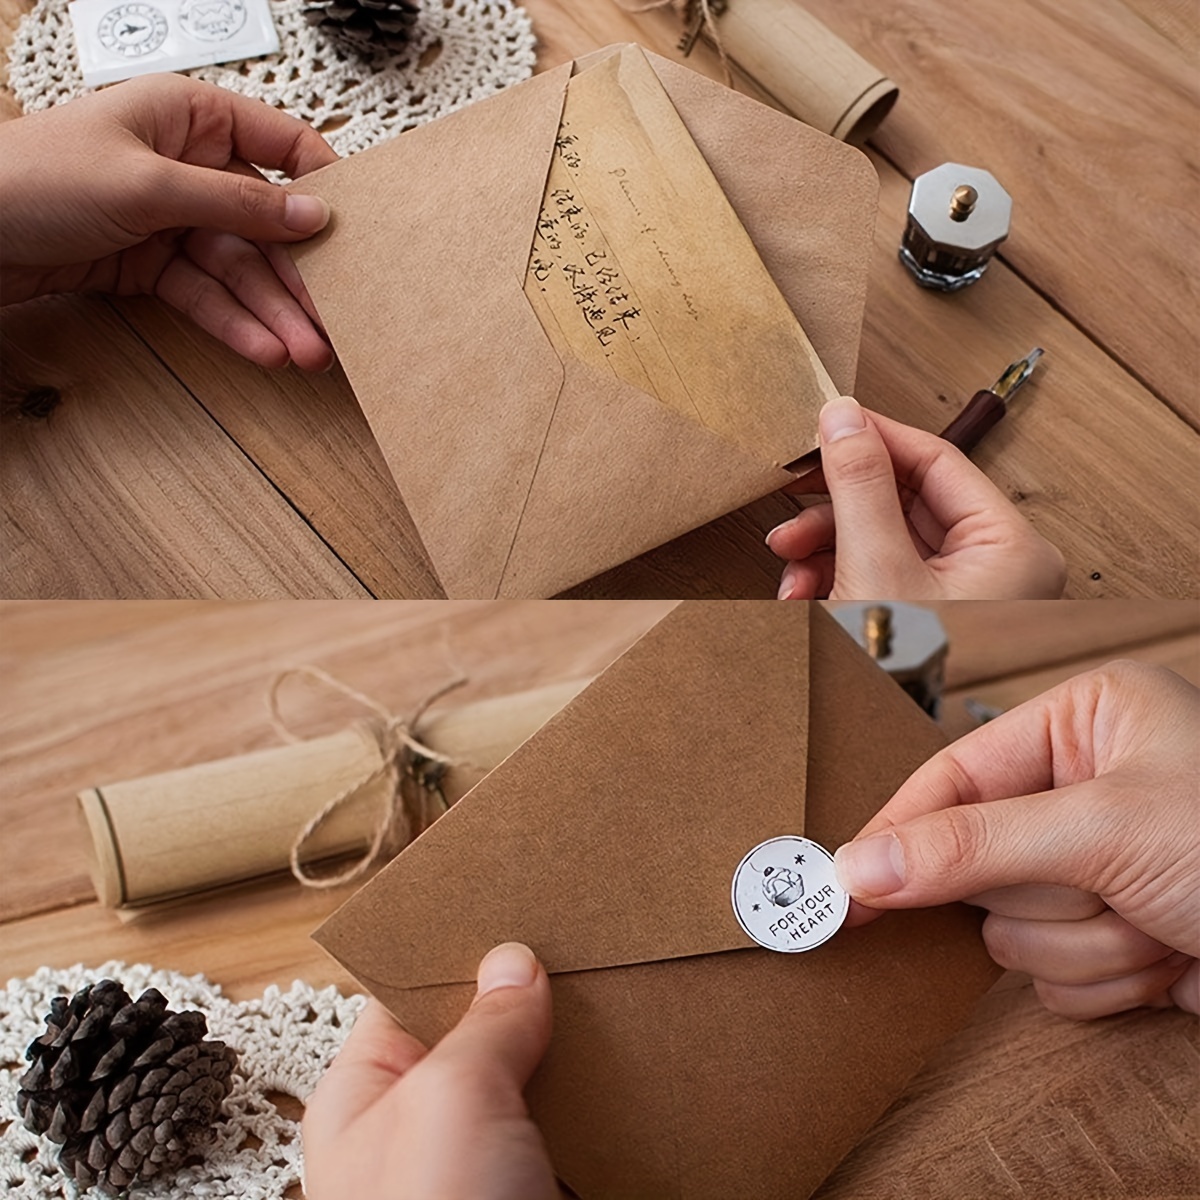 Kraft Paper Invitation Envelopes 4x6 for Wedding, Baby Shower, A6 V-Flap  Brown Envelopes for Thank You Cards (50 Pack)